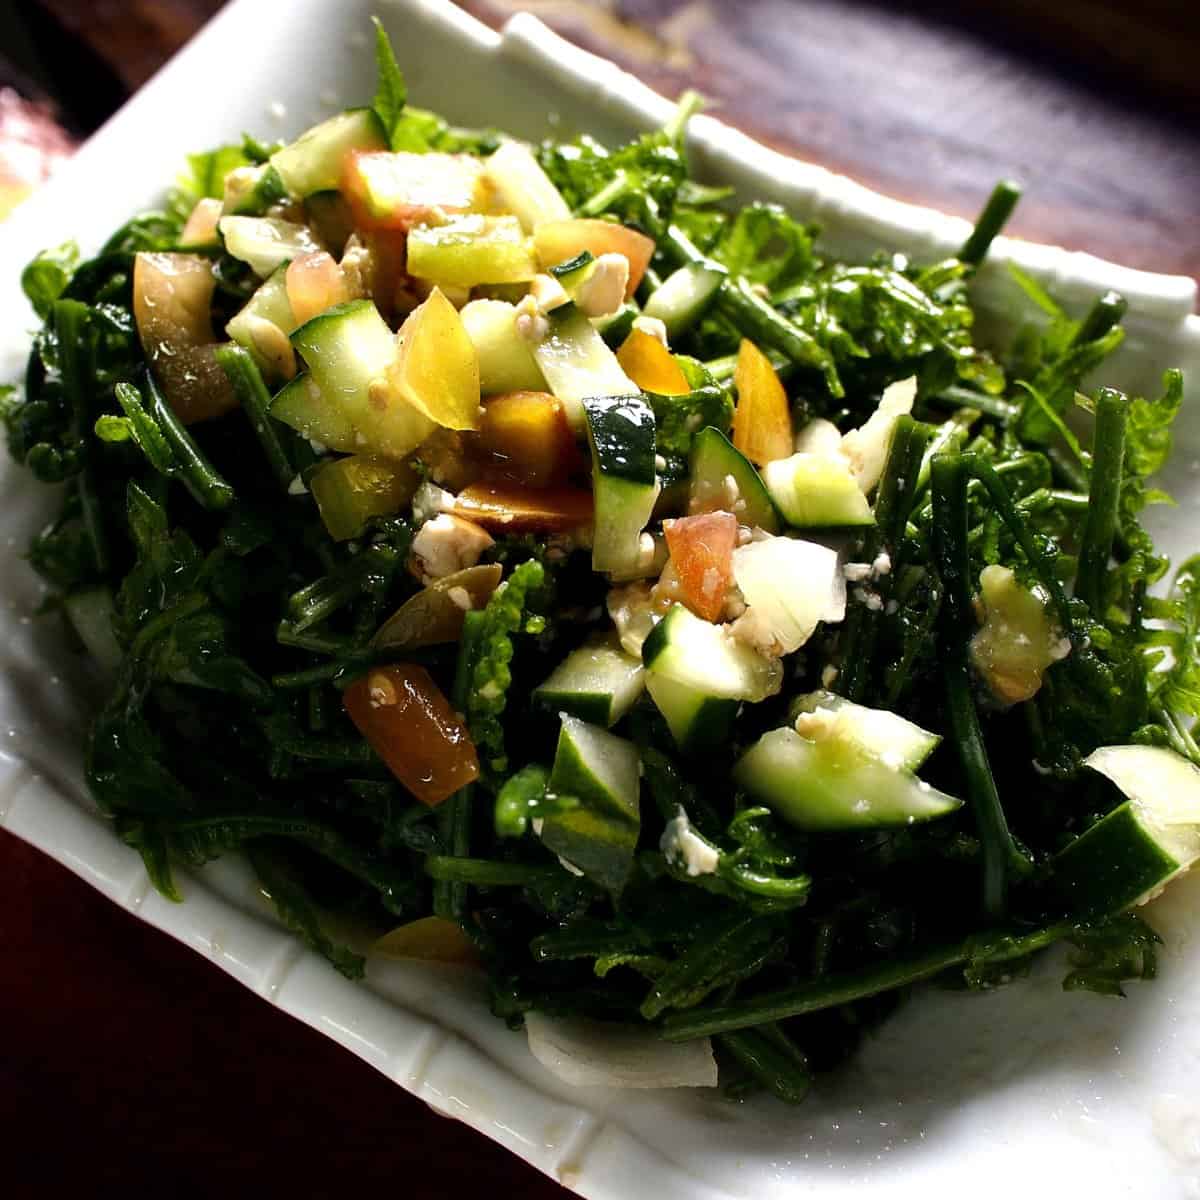 What is pako salad